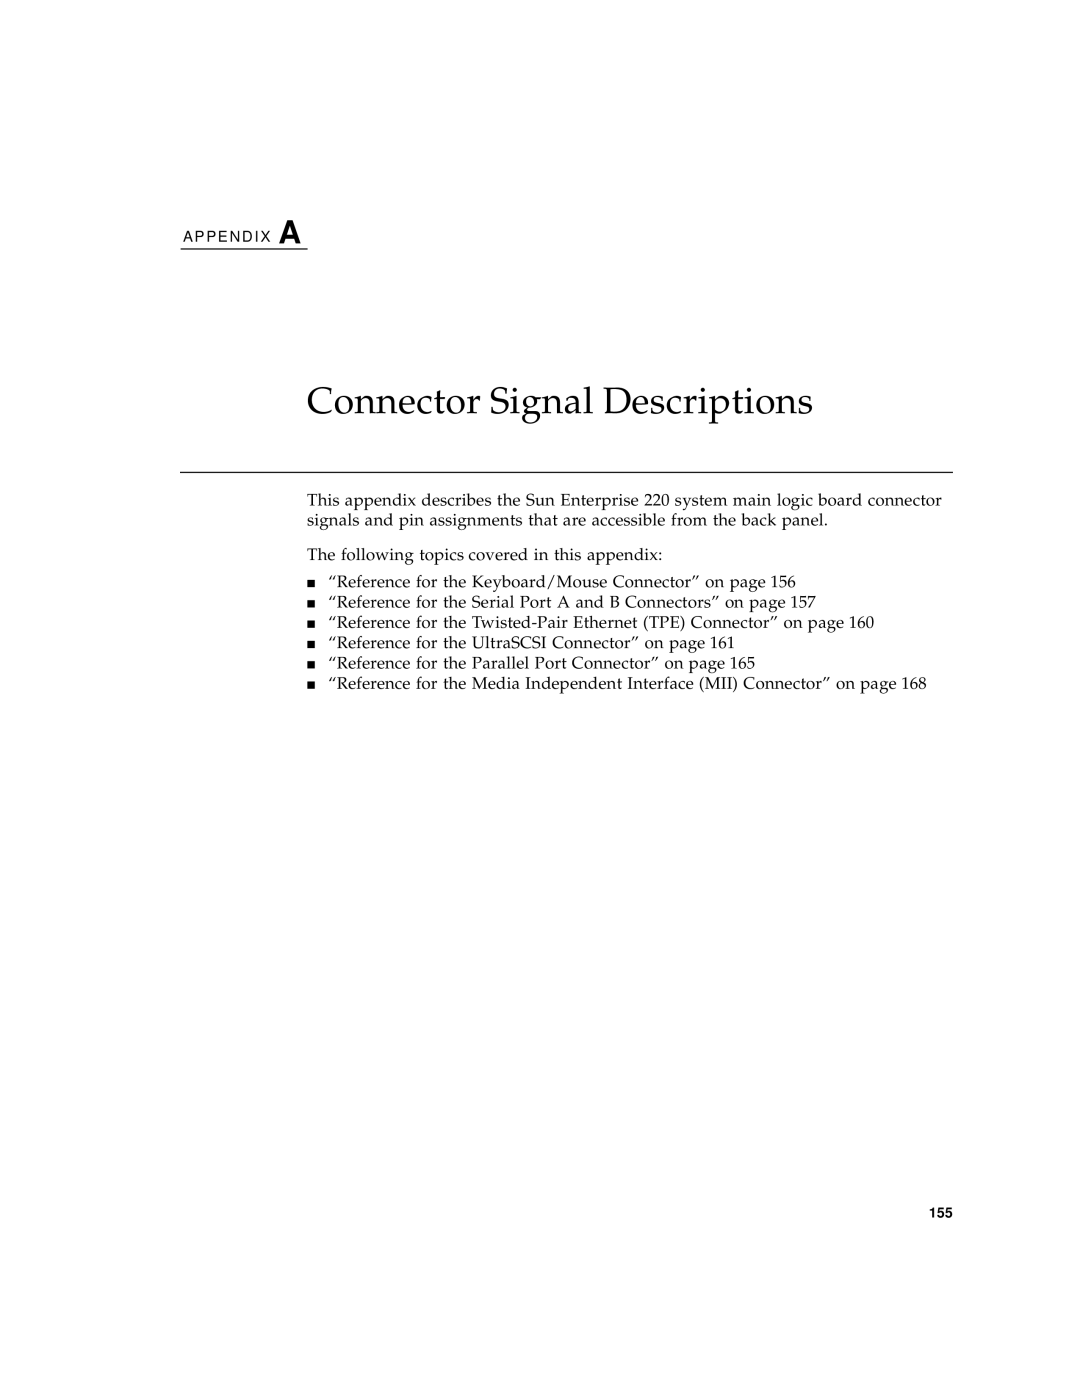 Sun Microsystems 220R manual Connector Signal Descriptions 